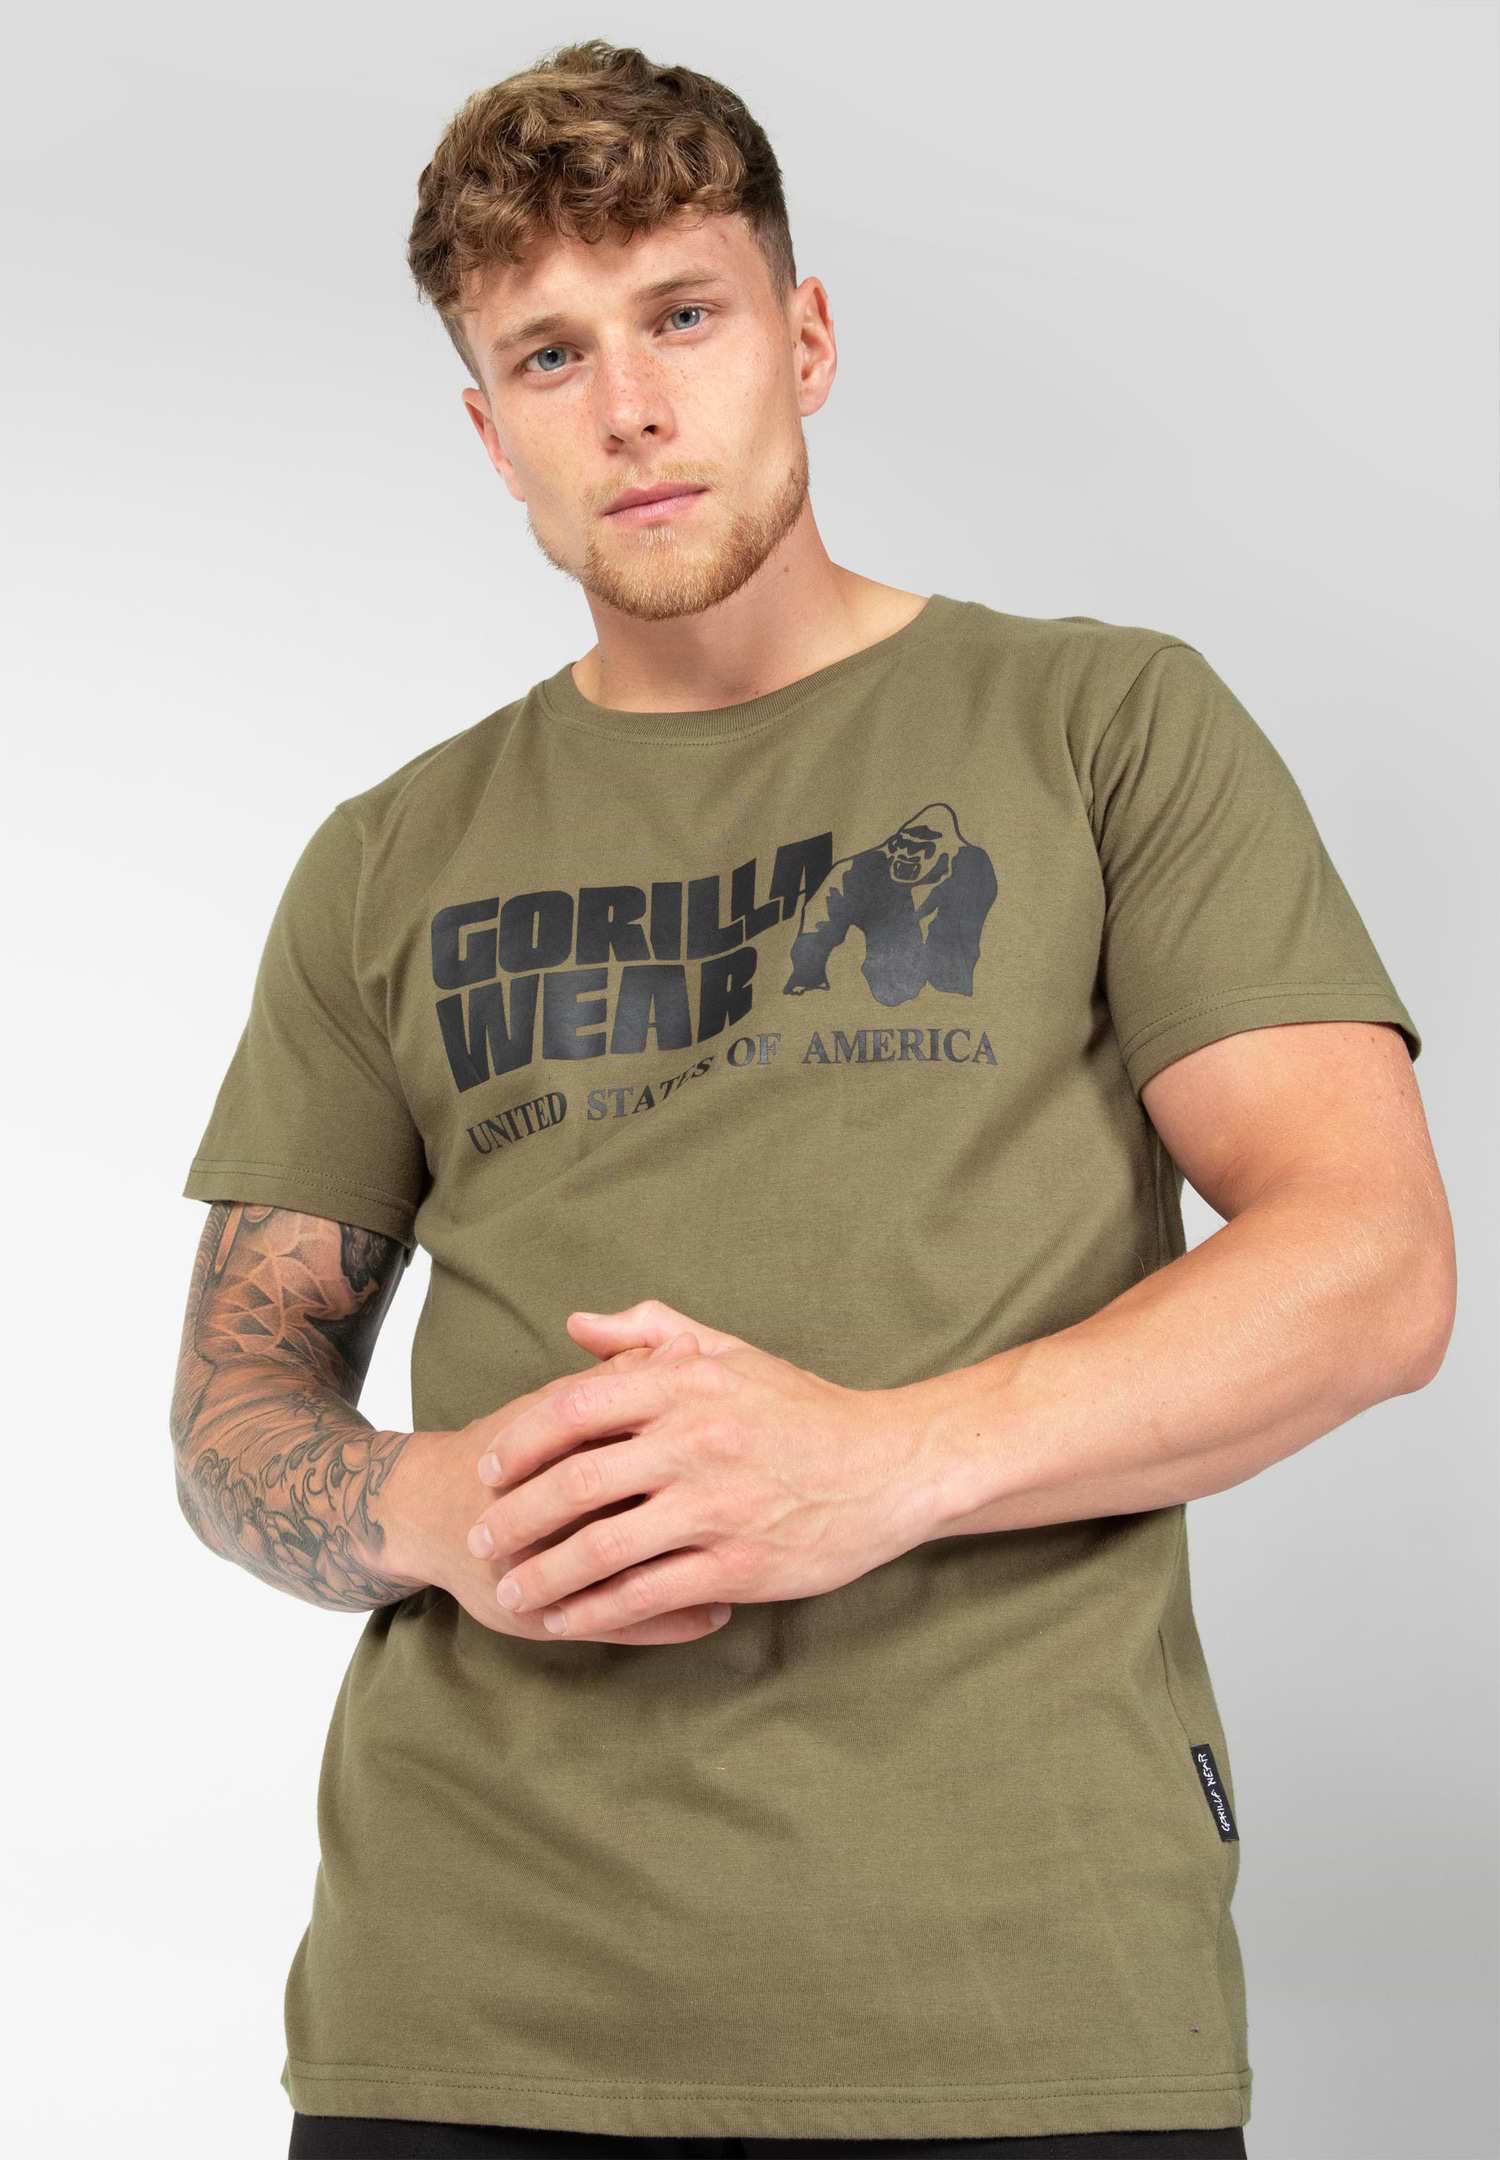 Gorilla Wear - Texas T Shirt Army Green, SHOP GYM CLOTHES, BODYBUILDING  SHOES